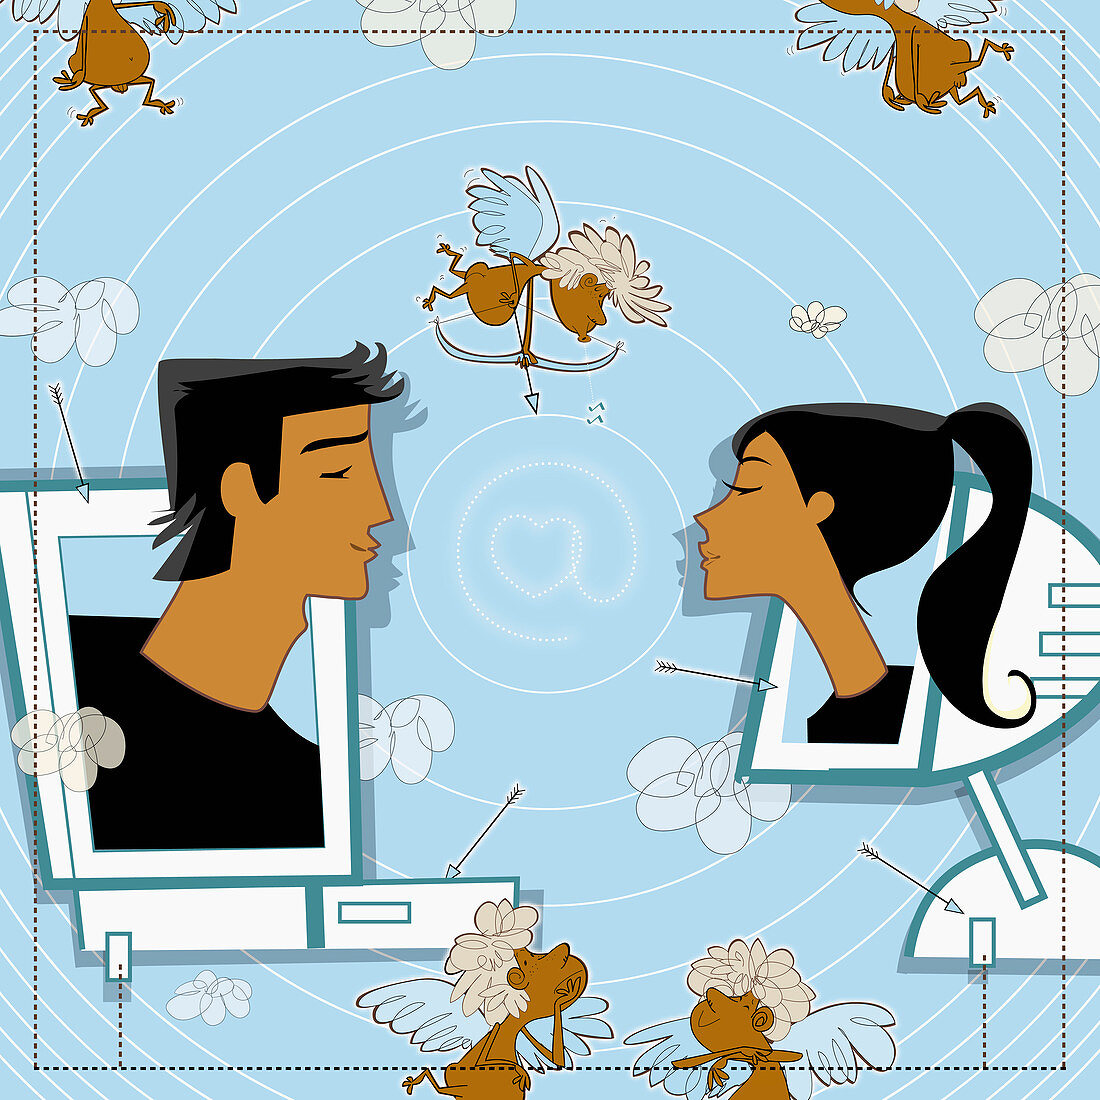 Man and woman on computer monitors kissing, illustration